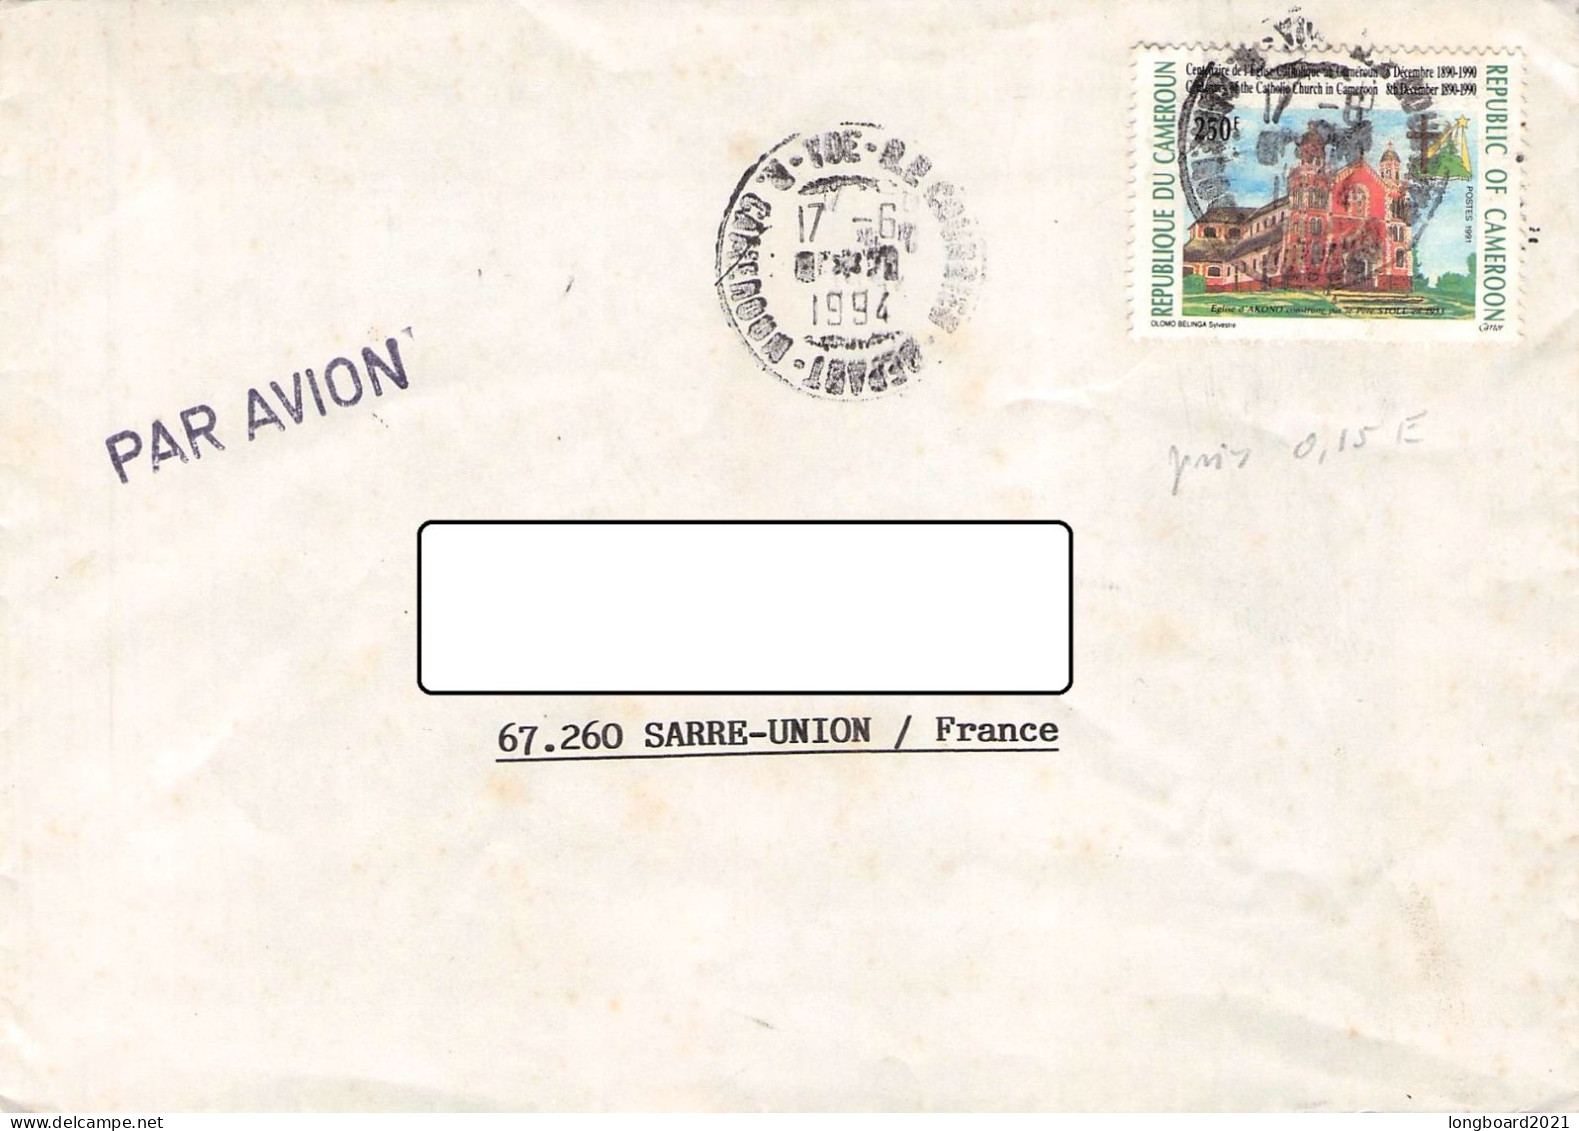 CAMEROON - AIRMAIL 1994 - SARRE UNION/FR /4518 - Cameroun (1960-...)